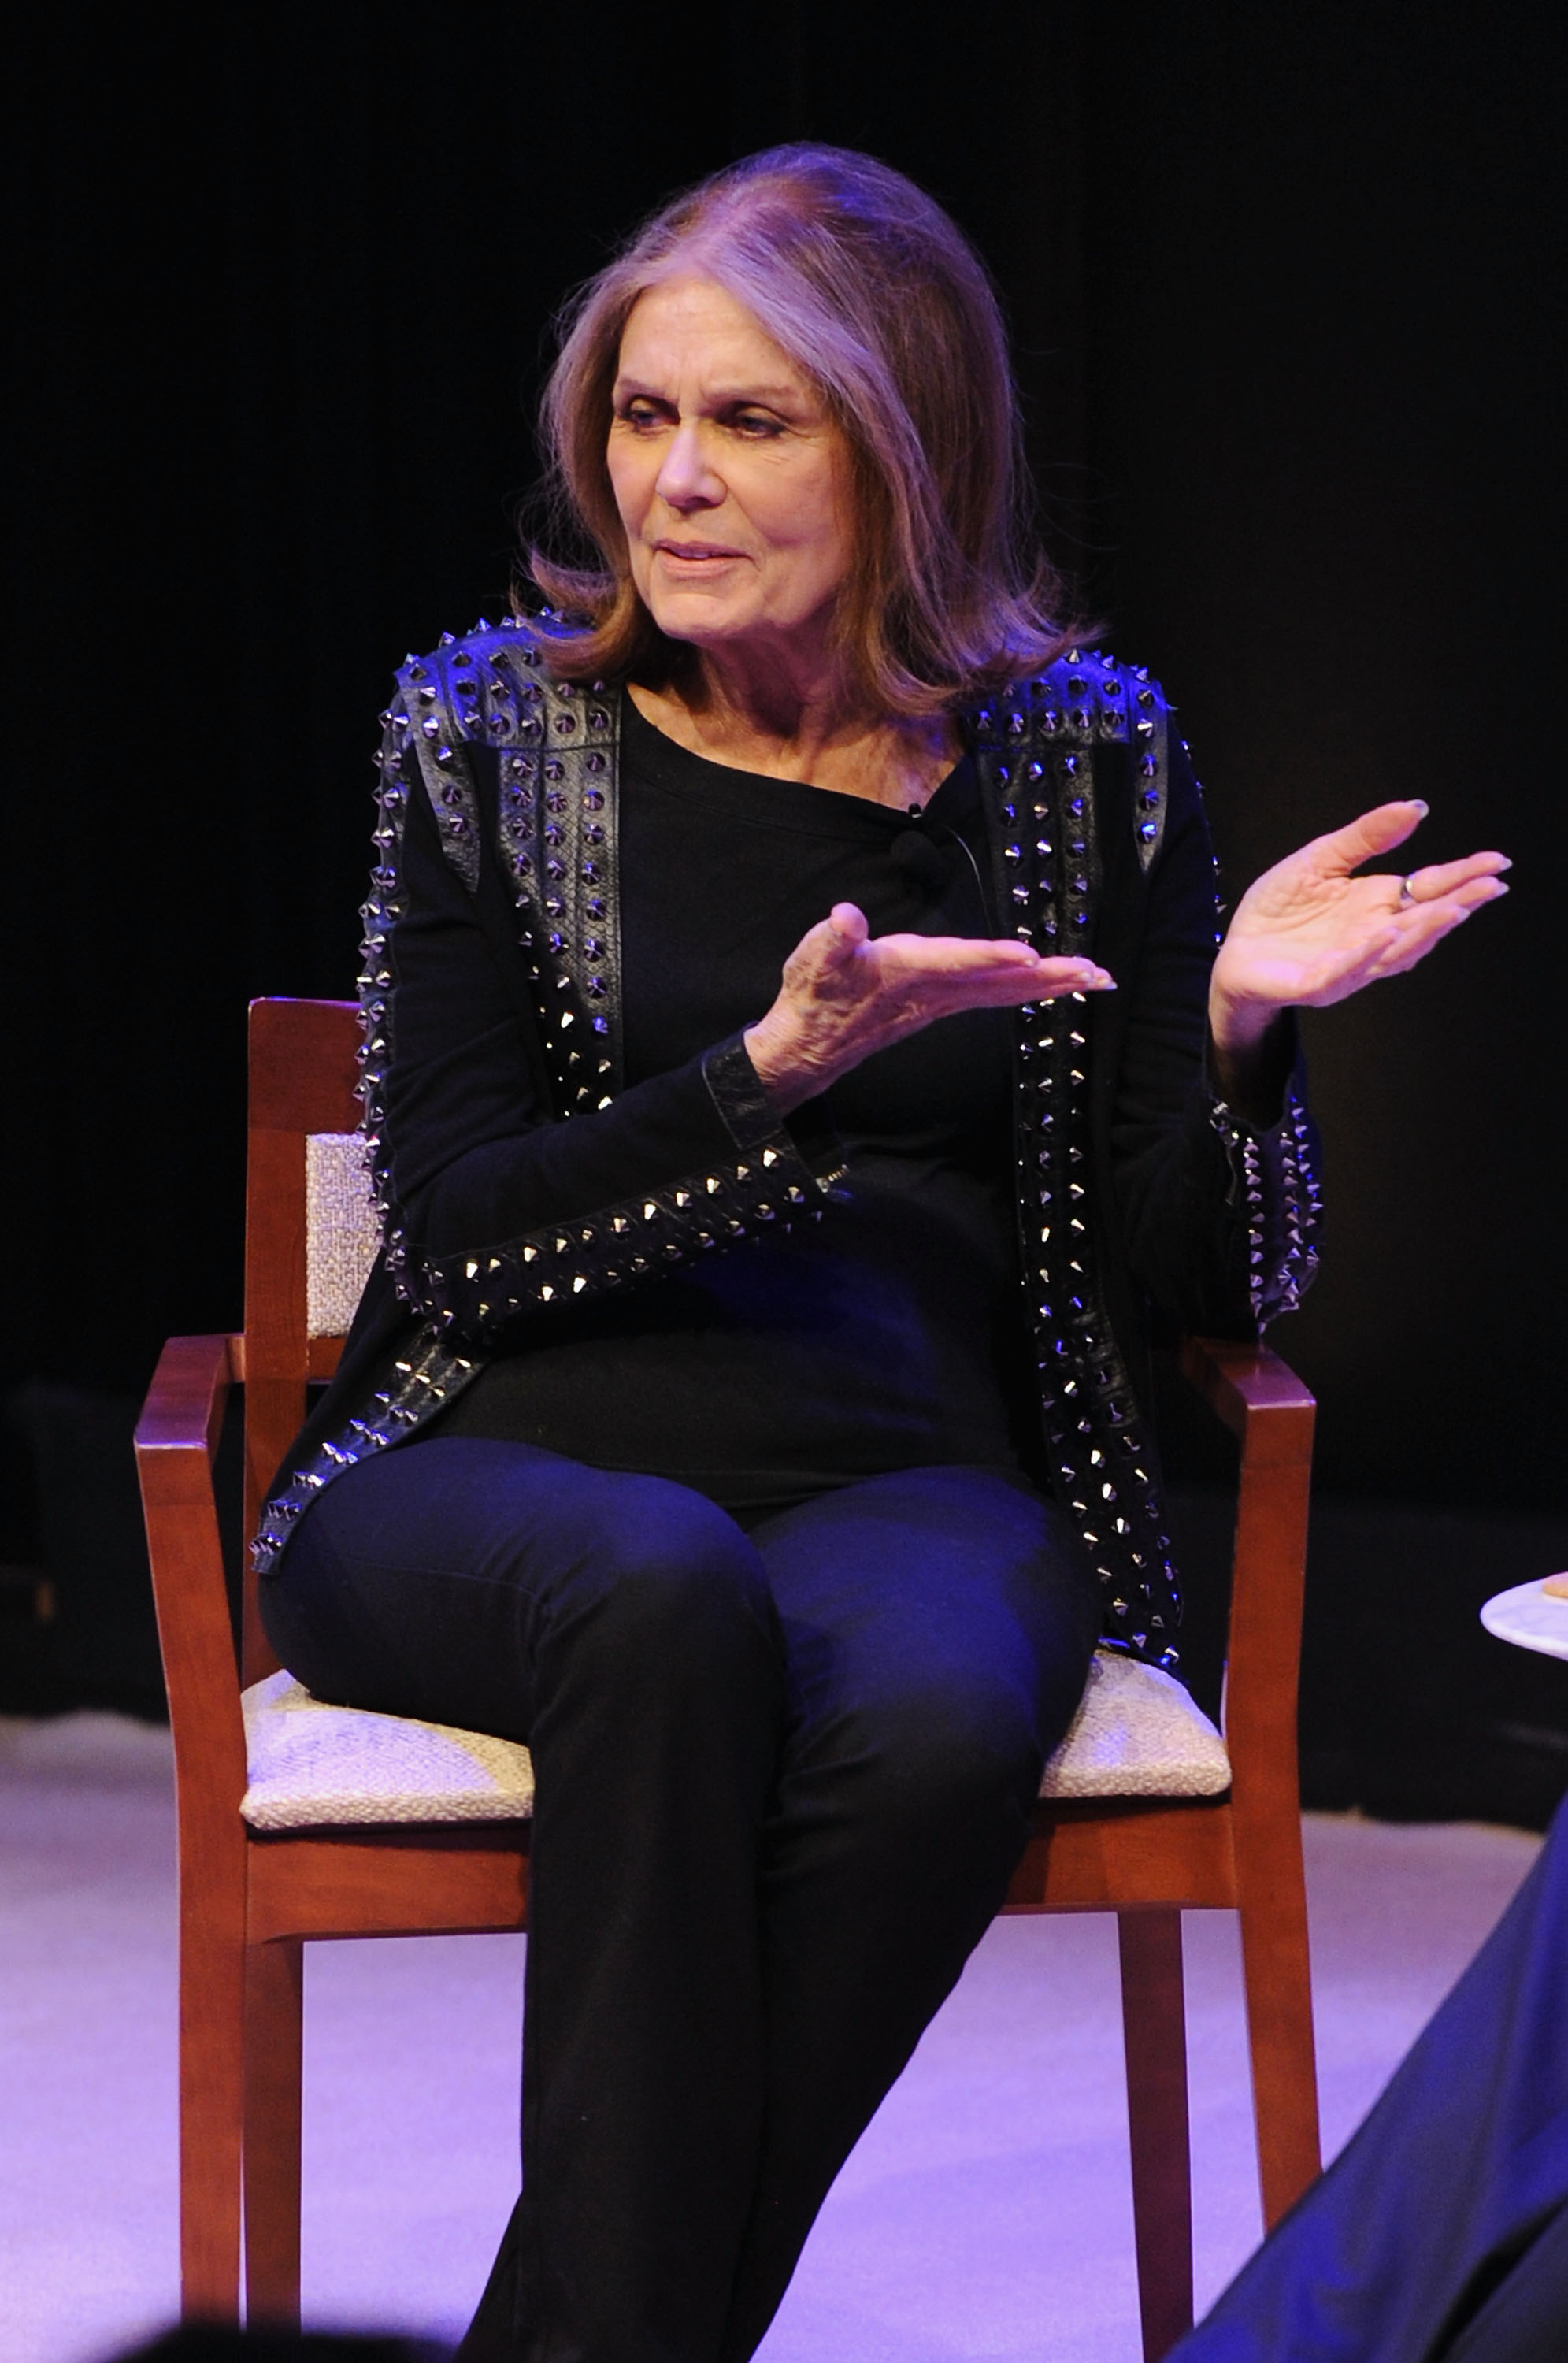 VICELAND New York Premiere Screening Of Gloria Steinem's "Woman"